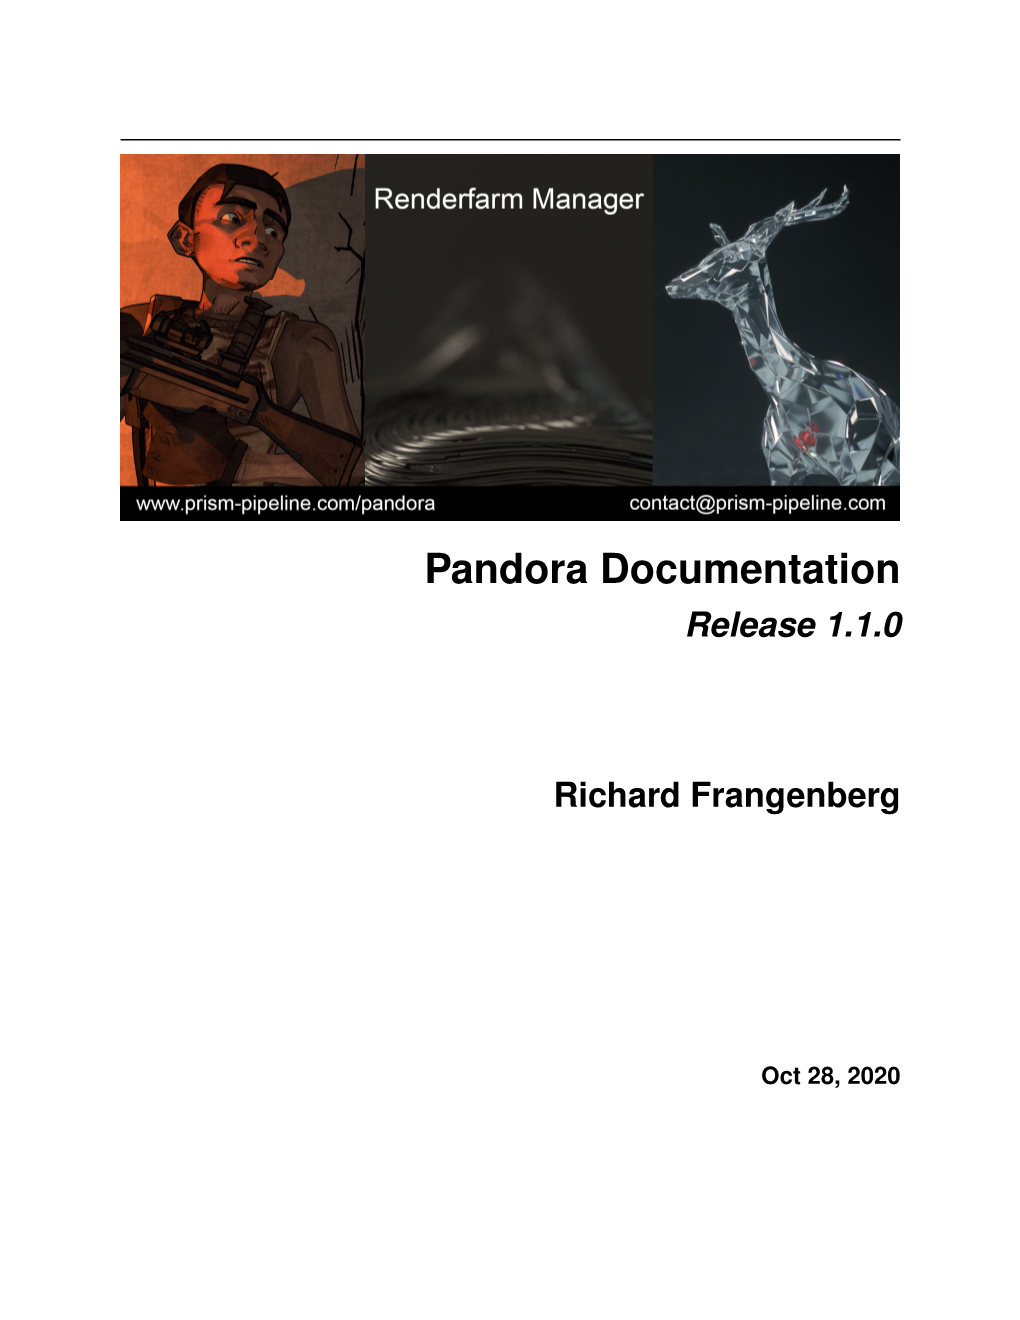 Pandora Documentation Release 1.1.0